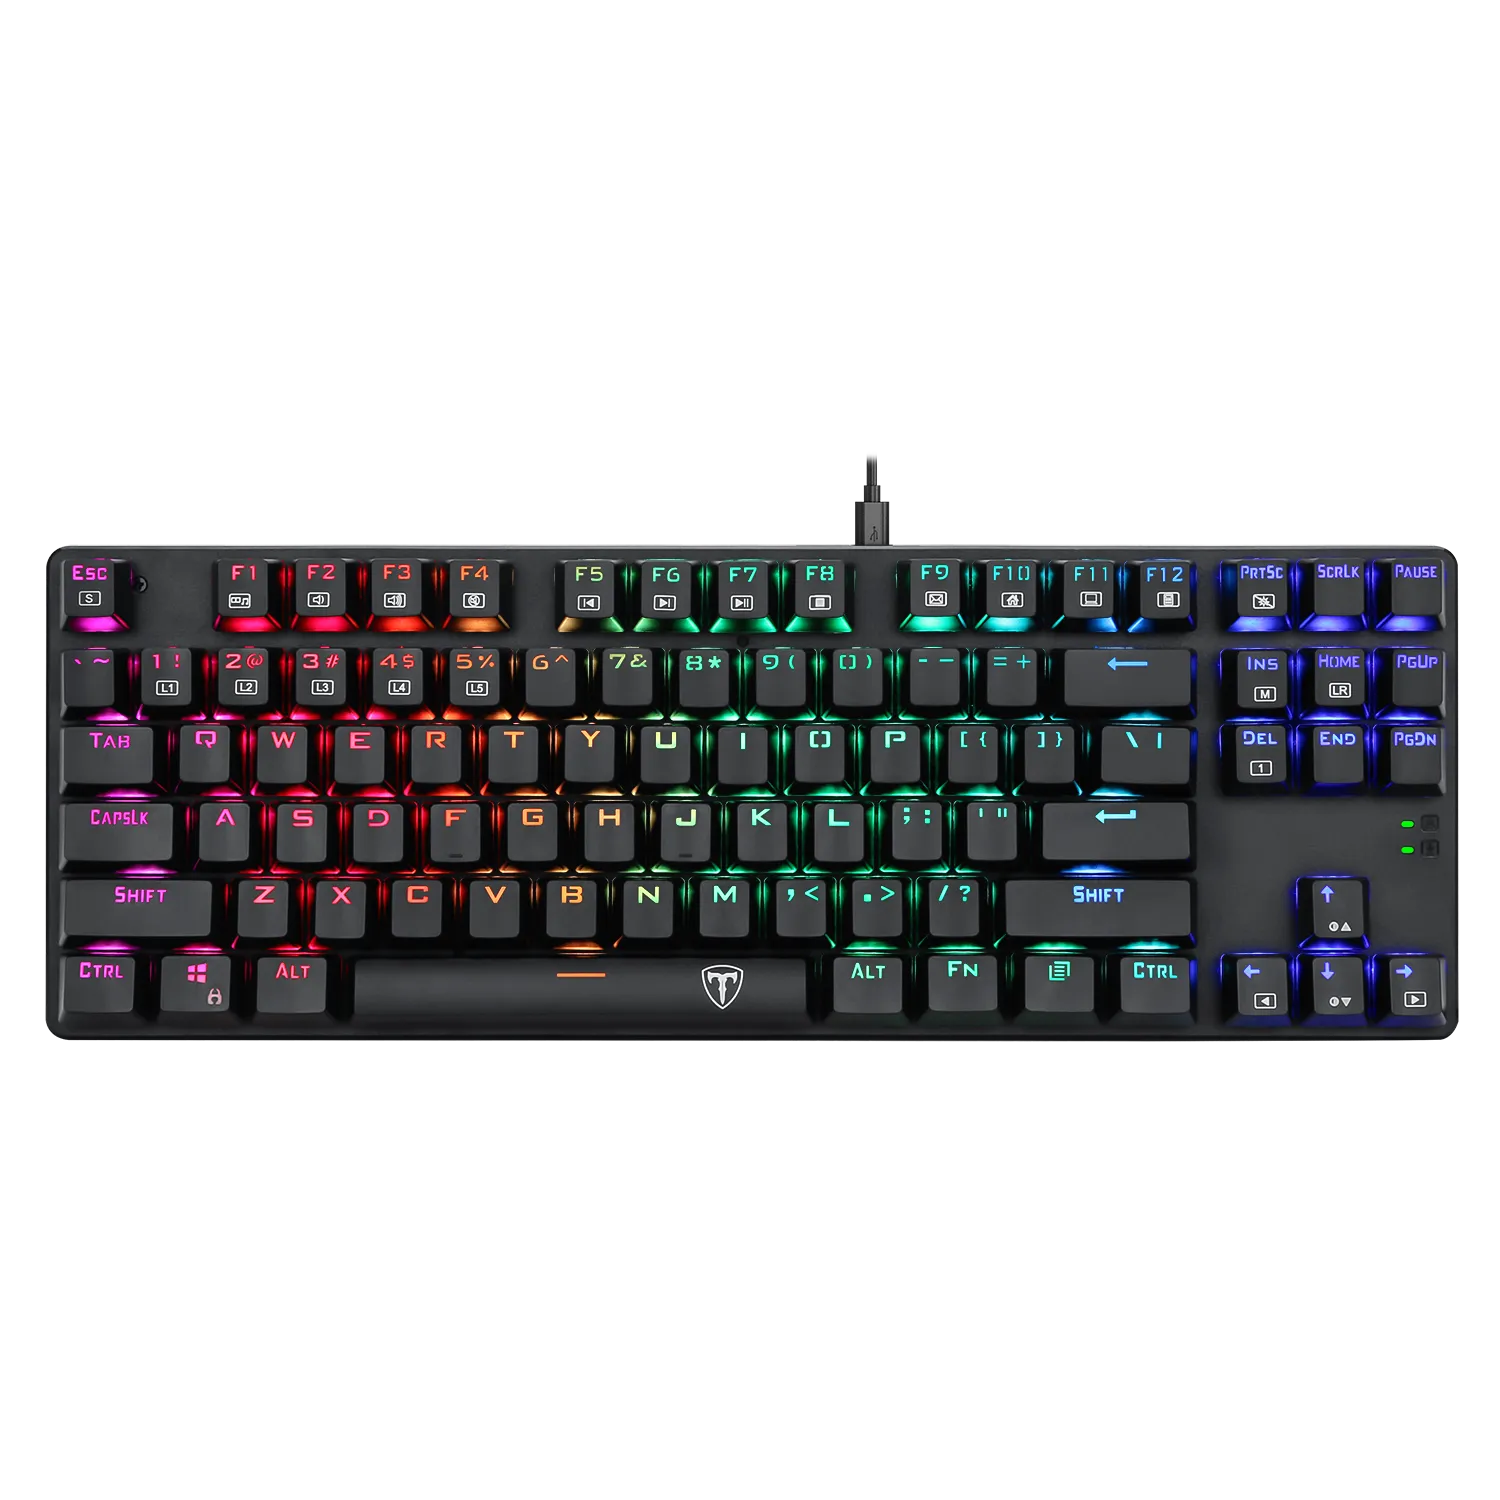 T-DAGGER Bora Mechanical Gaming Keyboard RGB T-TGK315